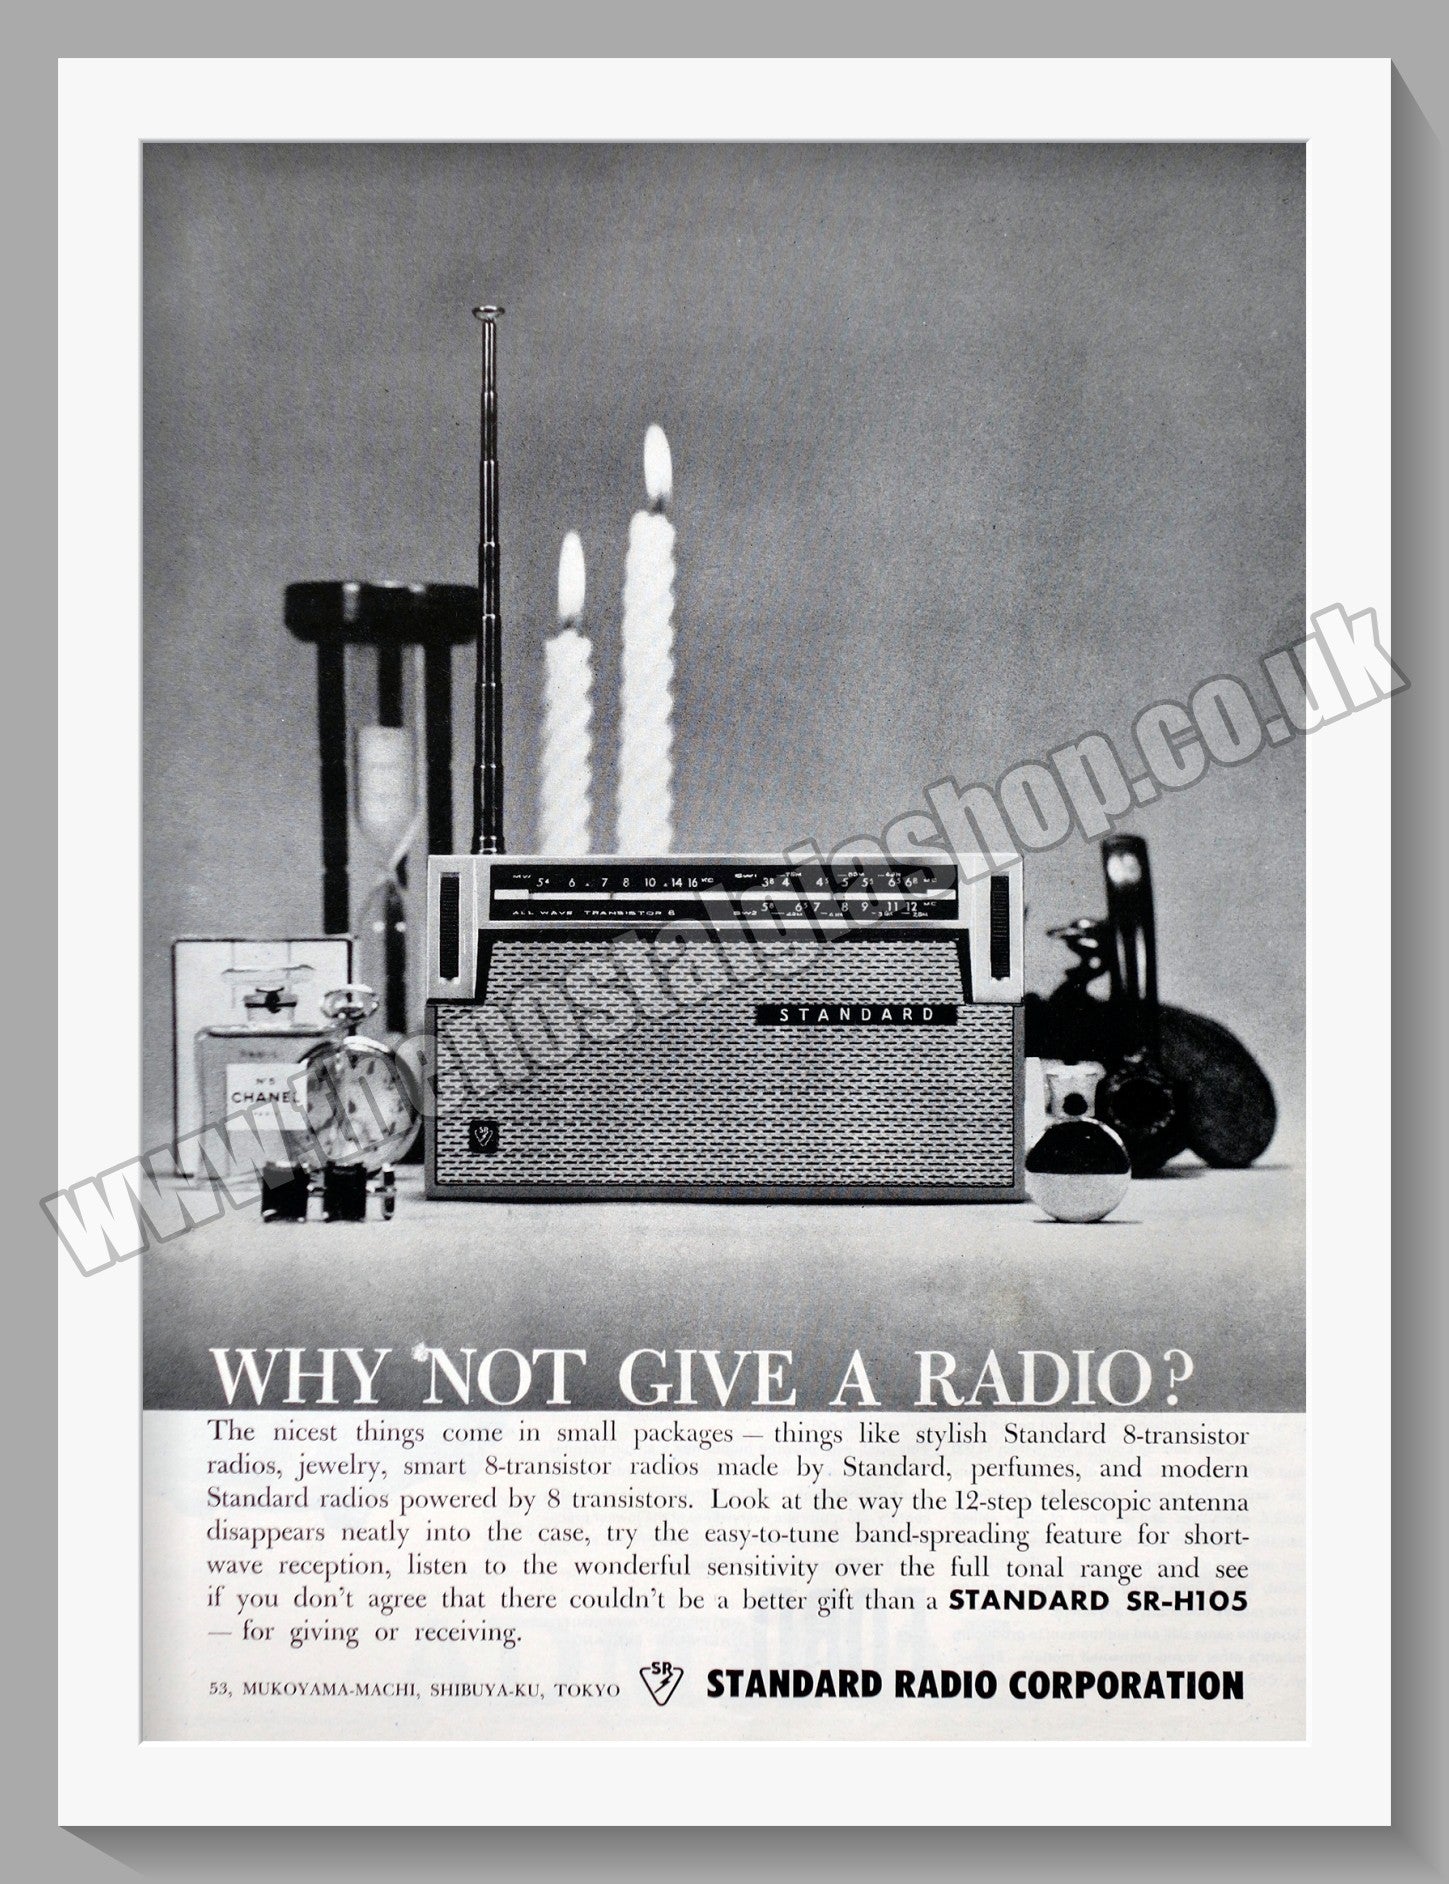 The History of the Transistor Radio